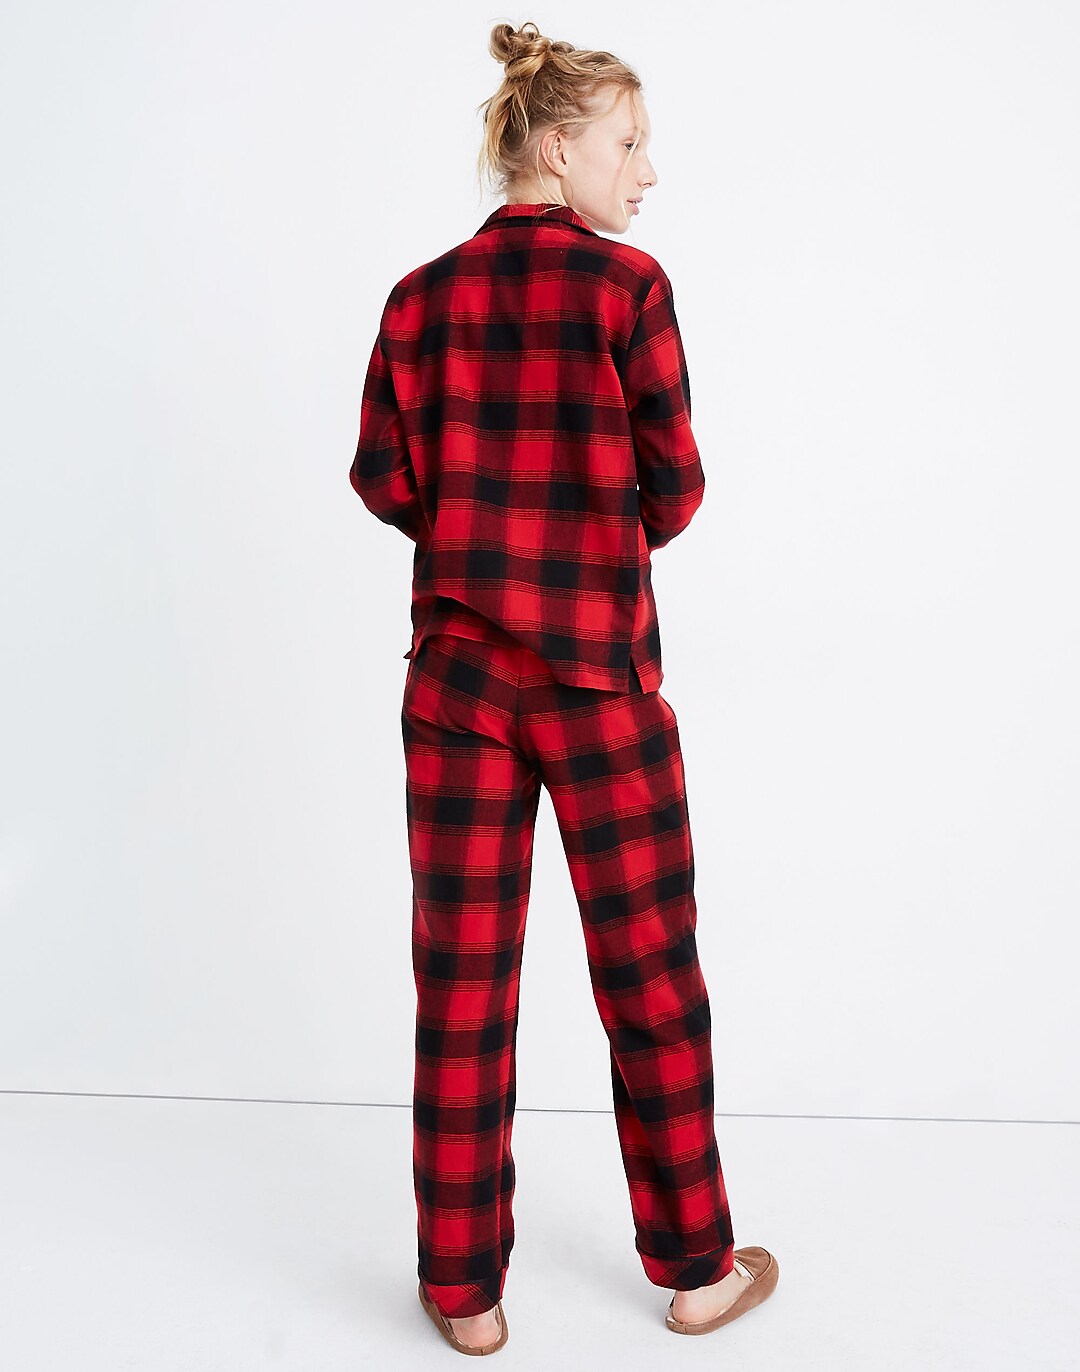 Flannel Bedtime Pajama Set in Buffalo Plaid